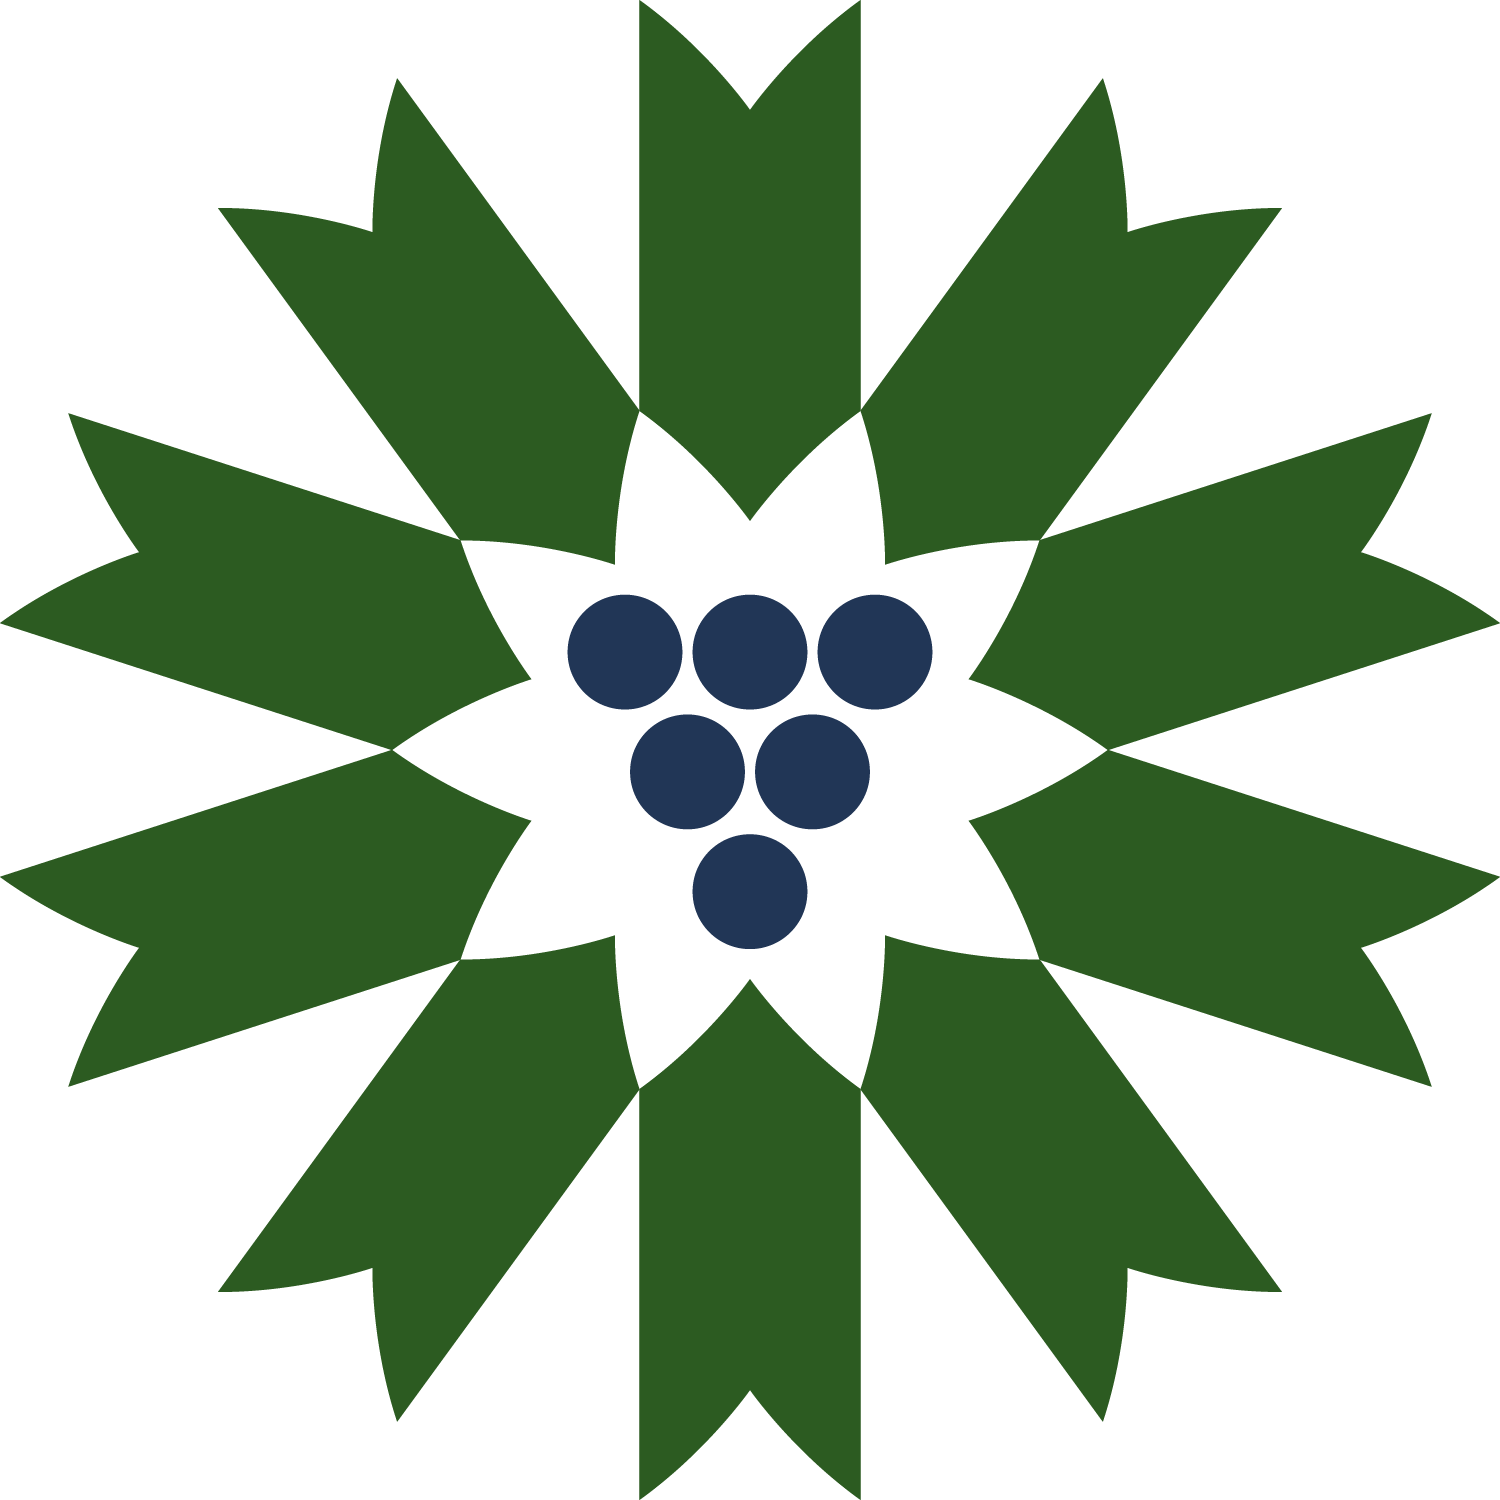 Prince Edward County Winegrowers Association